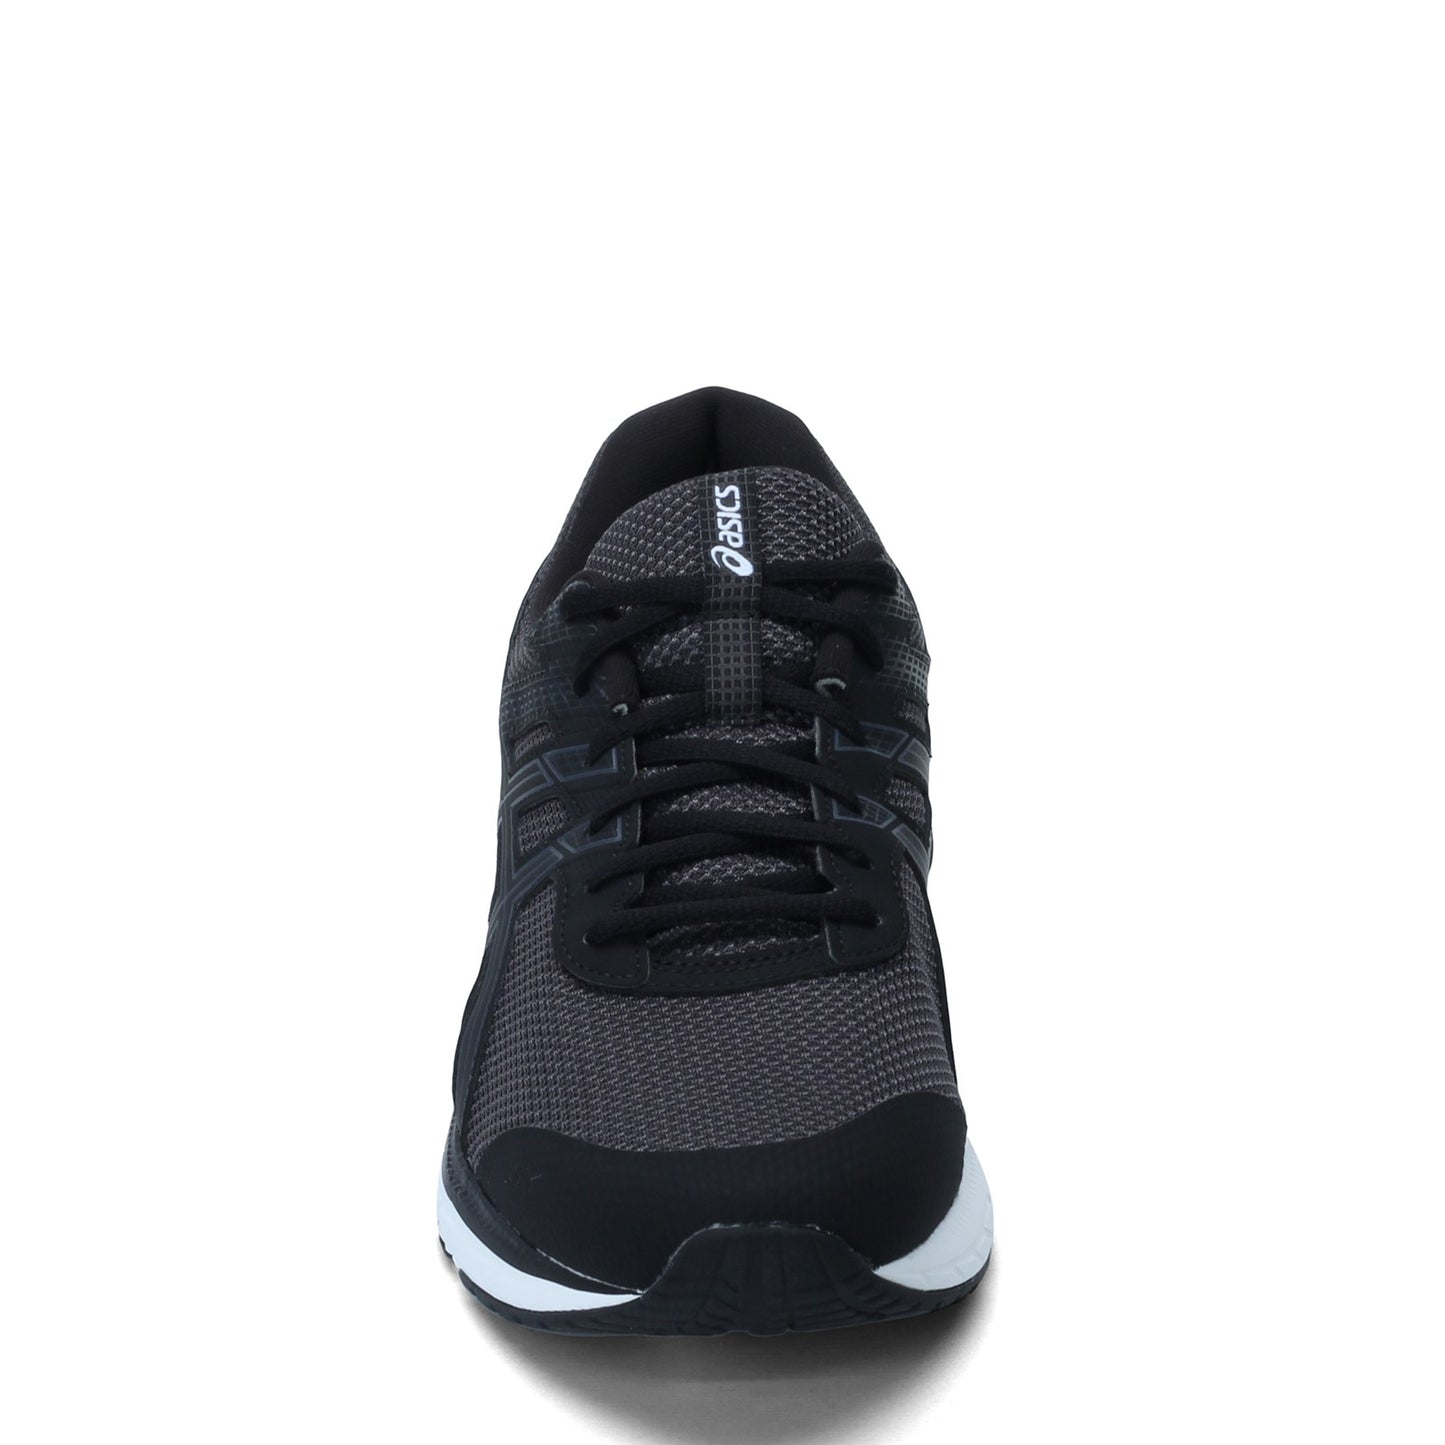 Peltz Shoes  Men's ASICS GEL-Contend 6 Running Shoe BLACK GRAY WHITE 1011A788-020